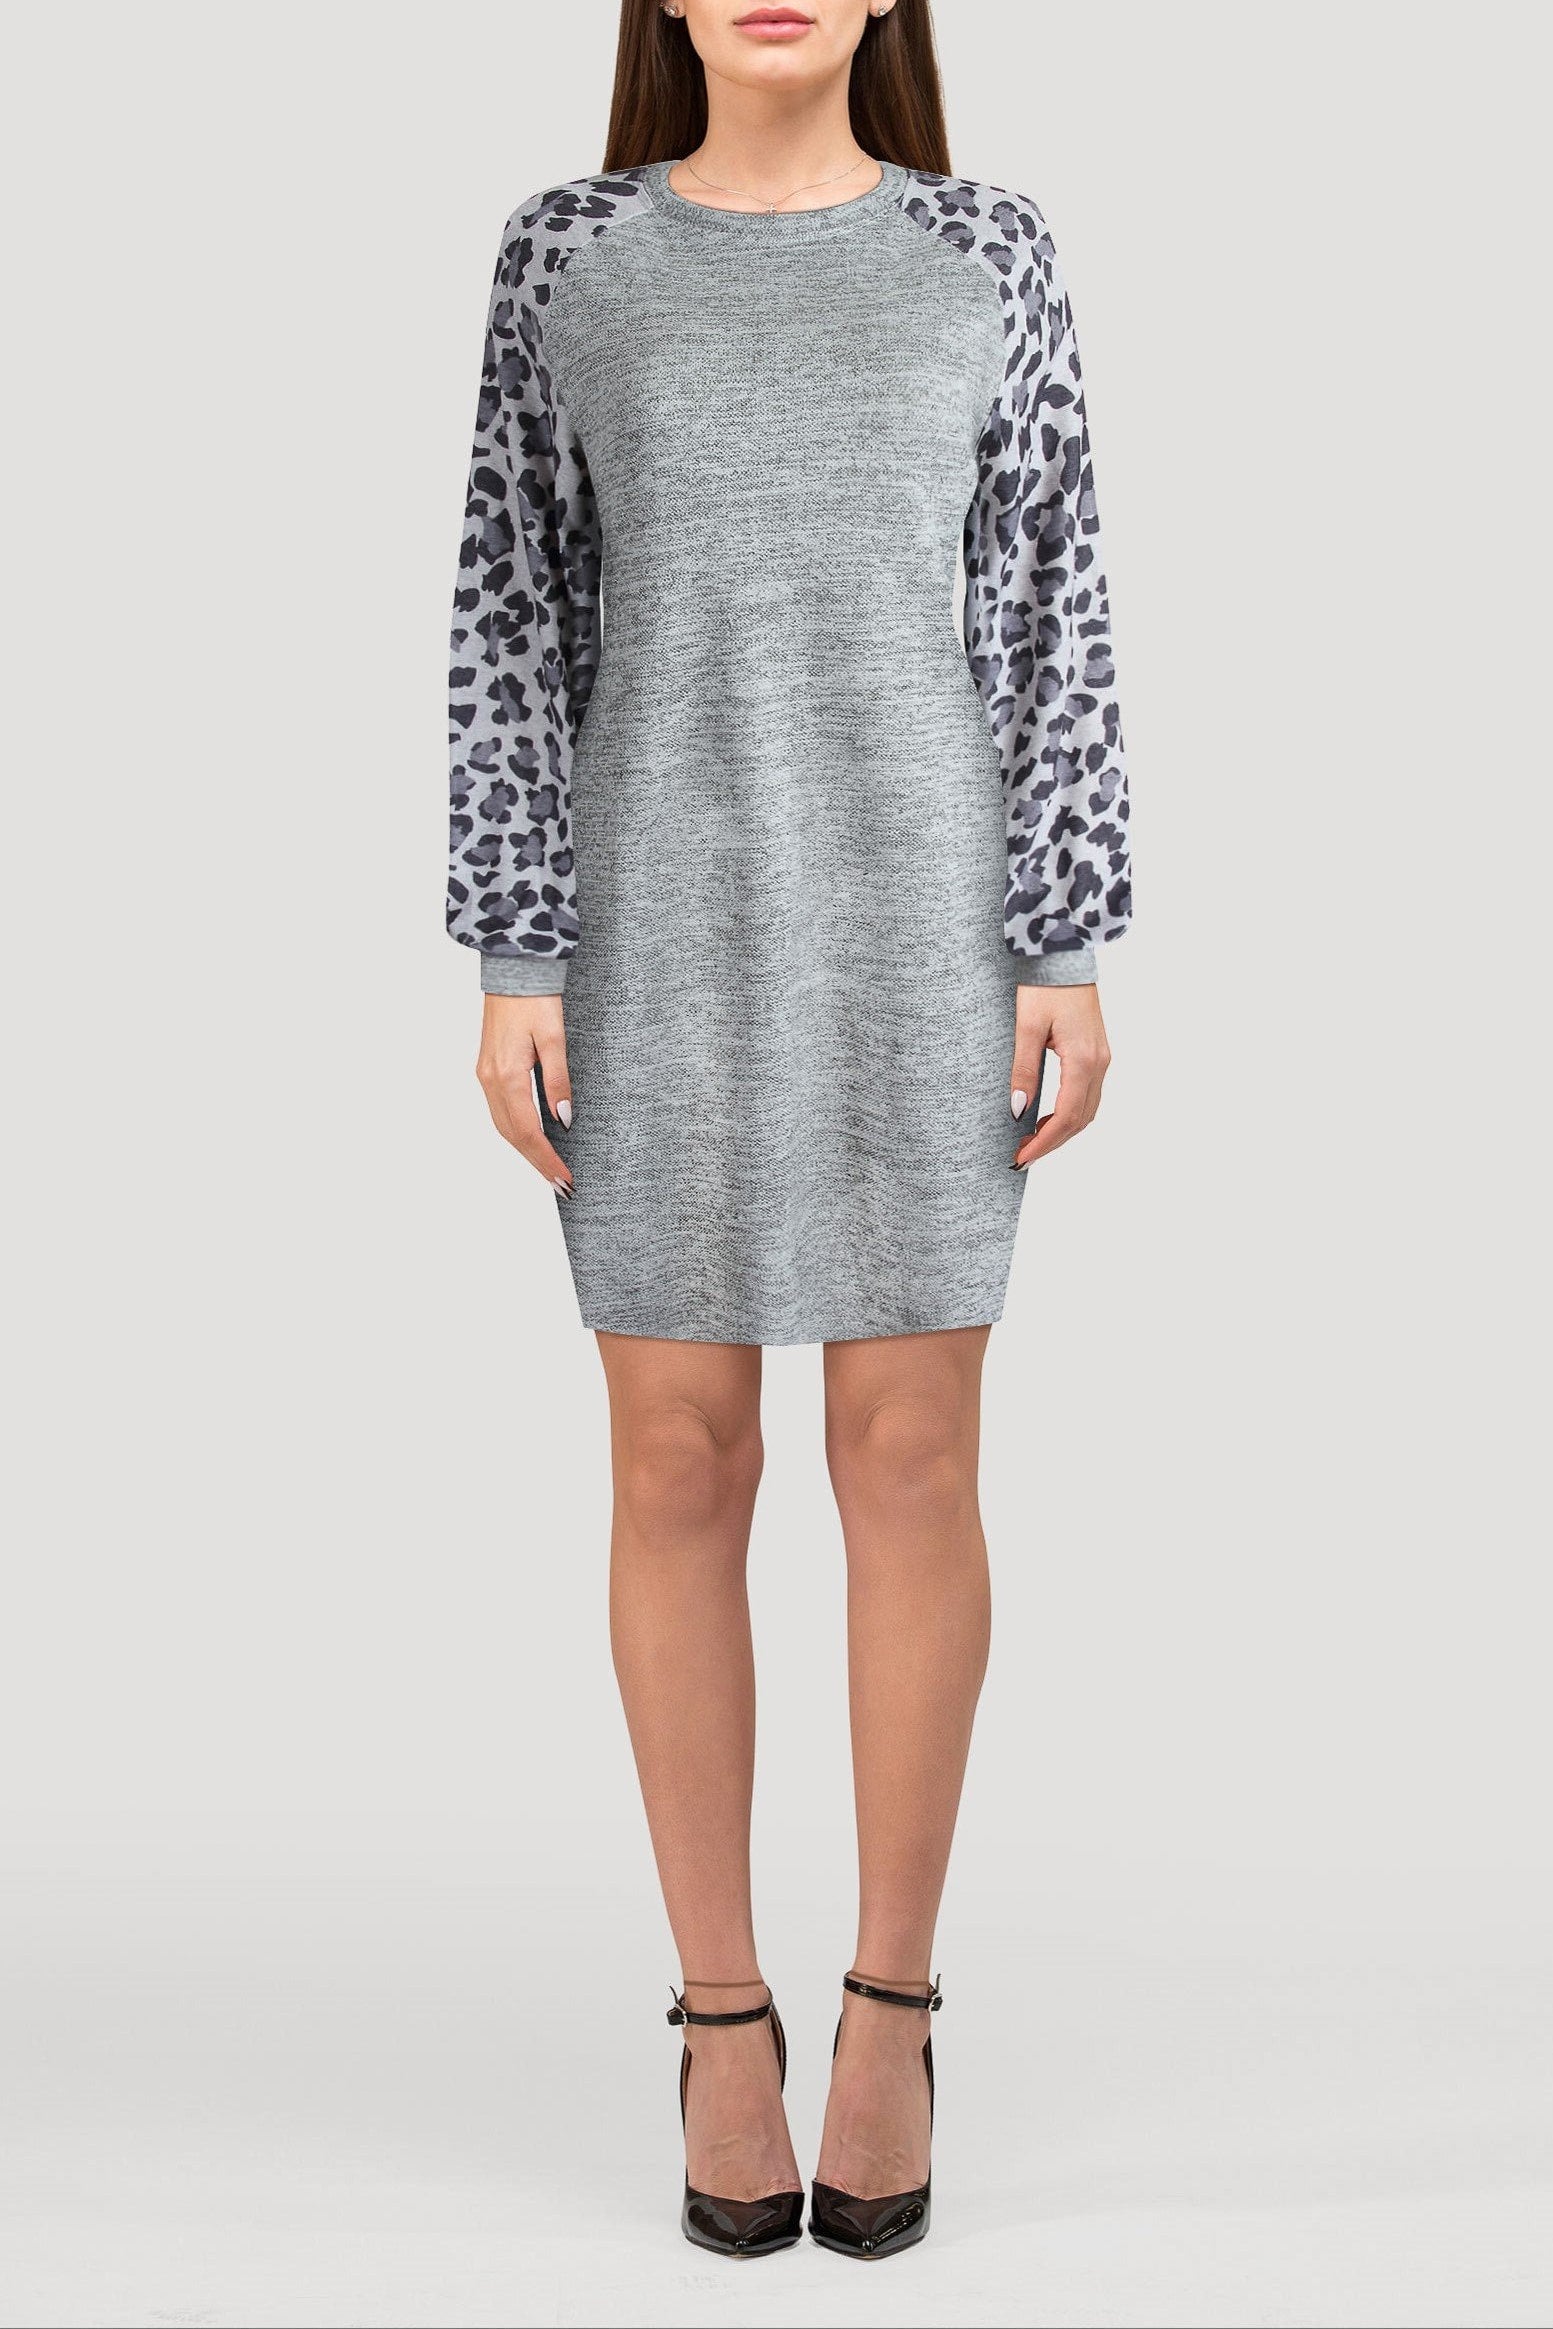 Darcey Leopard Sleeve Mini Dress - S / Multi - Clothing